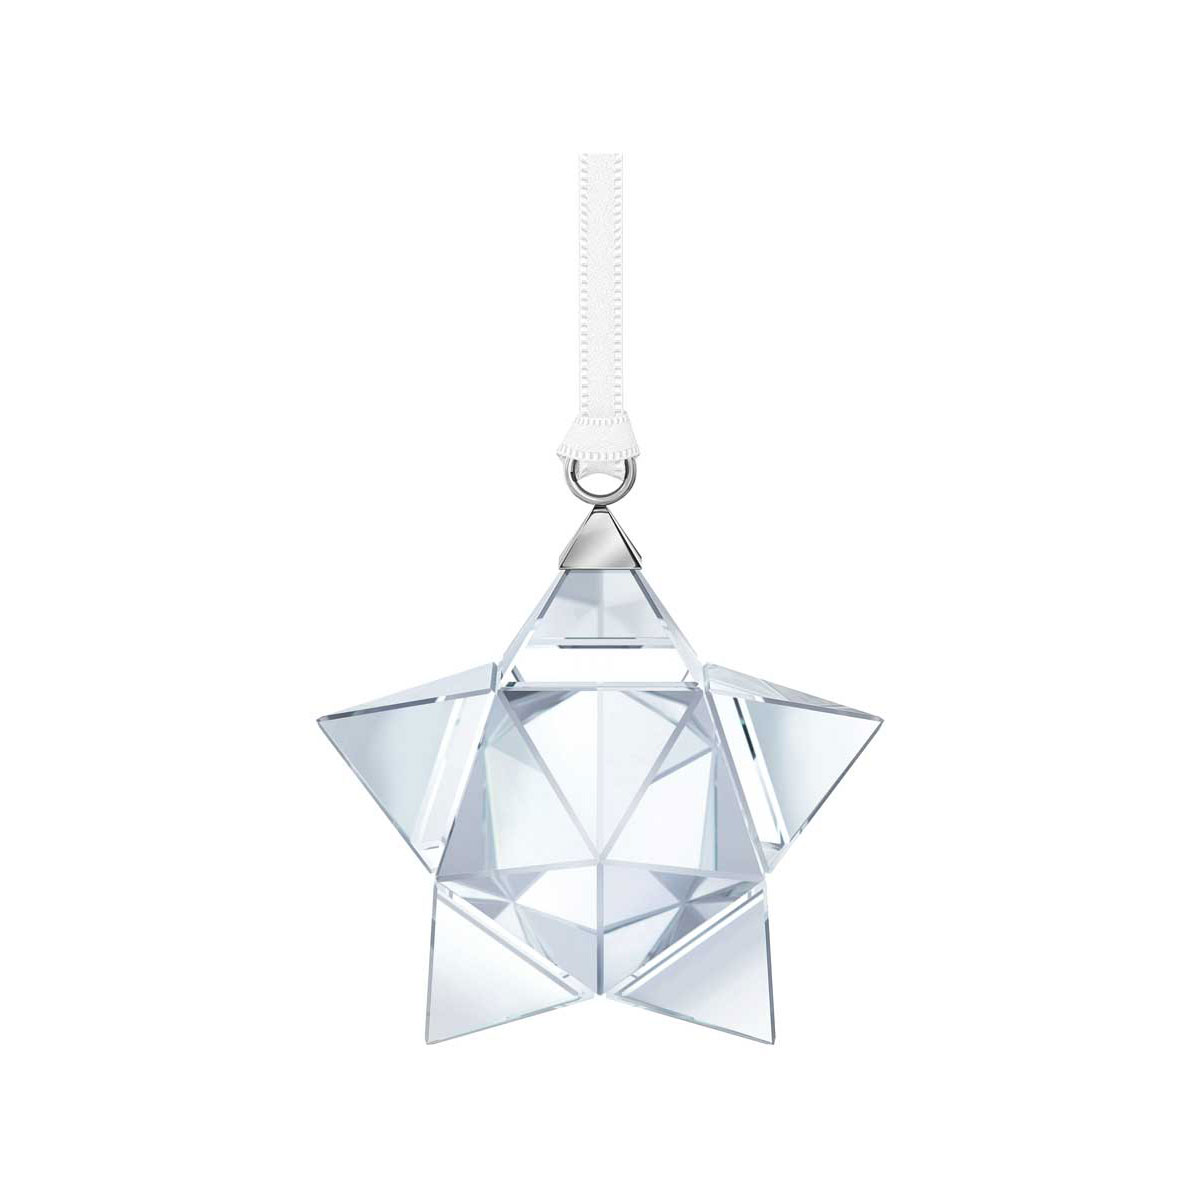 Swarovski Crystal, Small Star Crystal Ornament